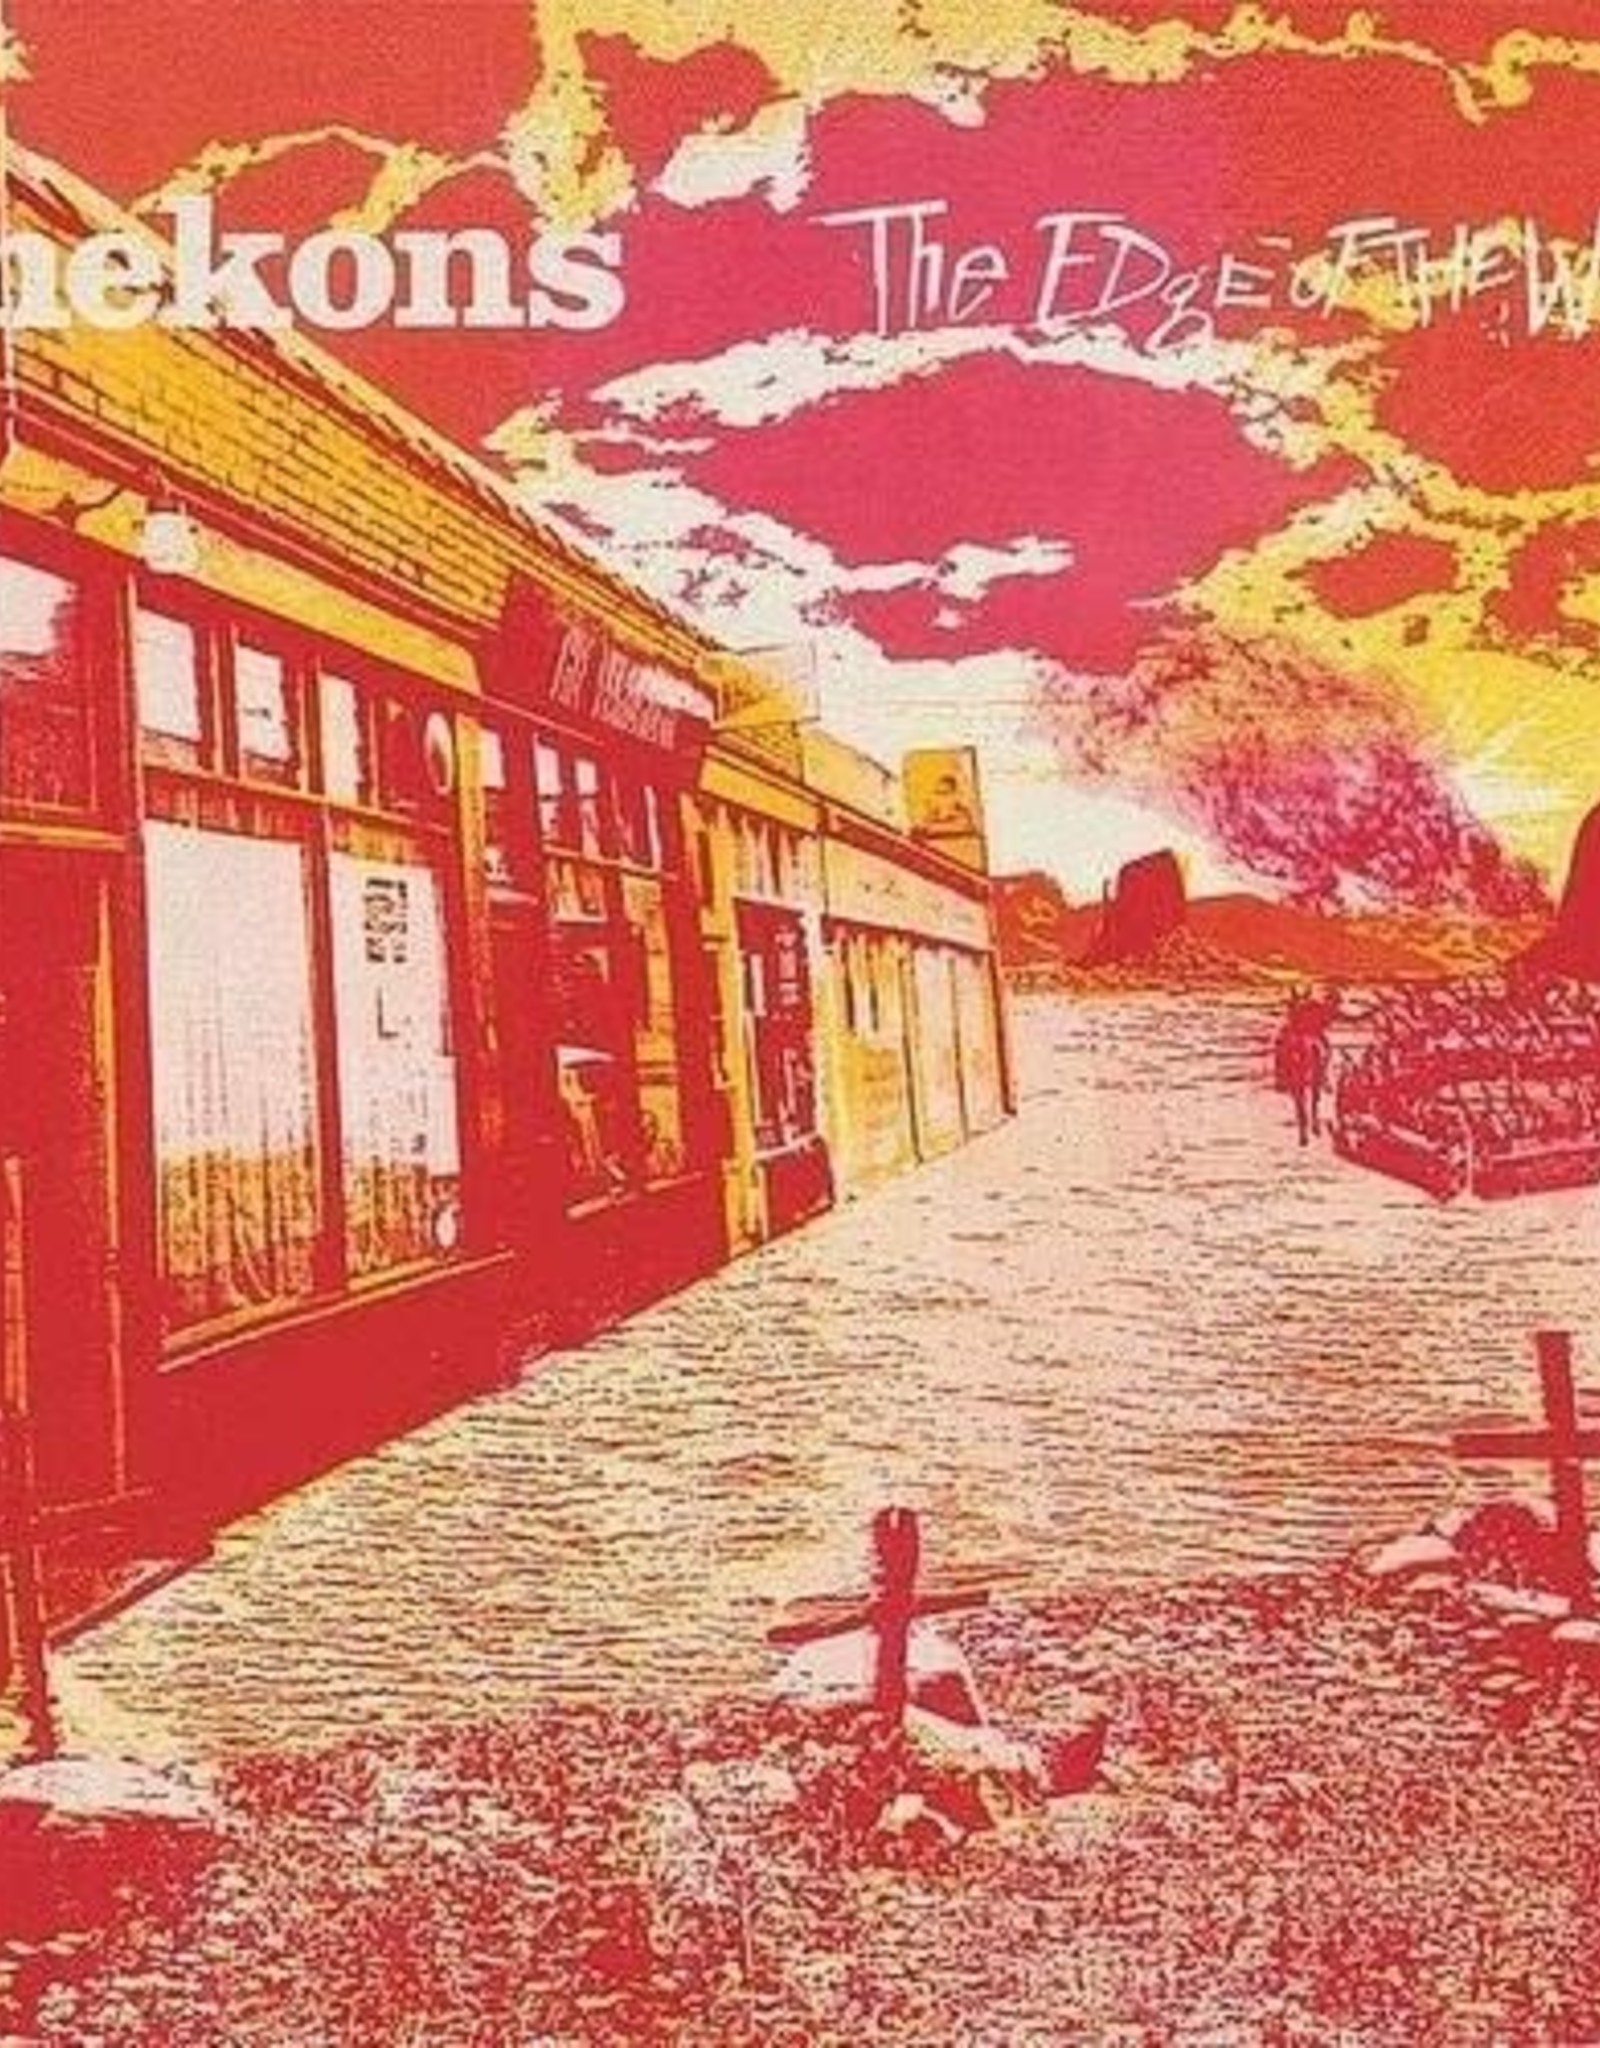 Mekons - Edge of the World